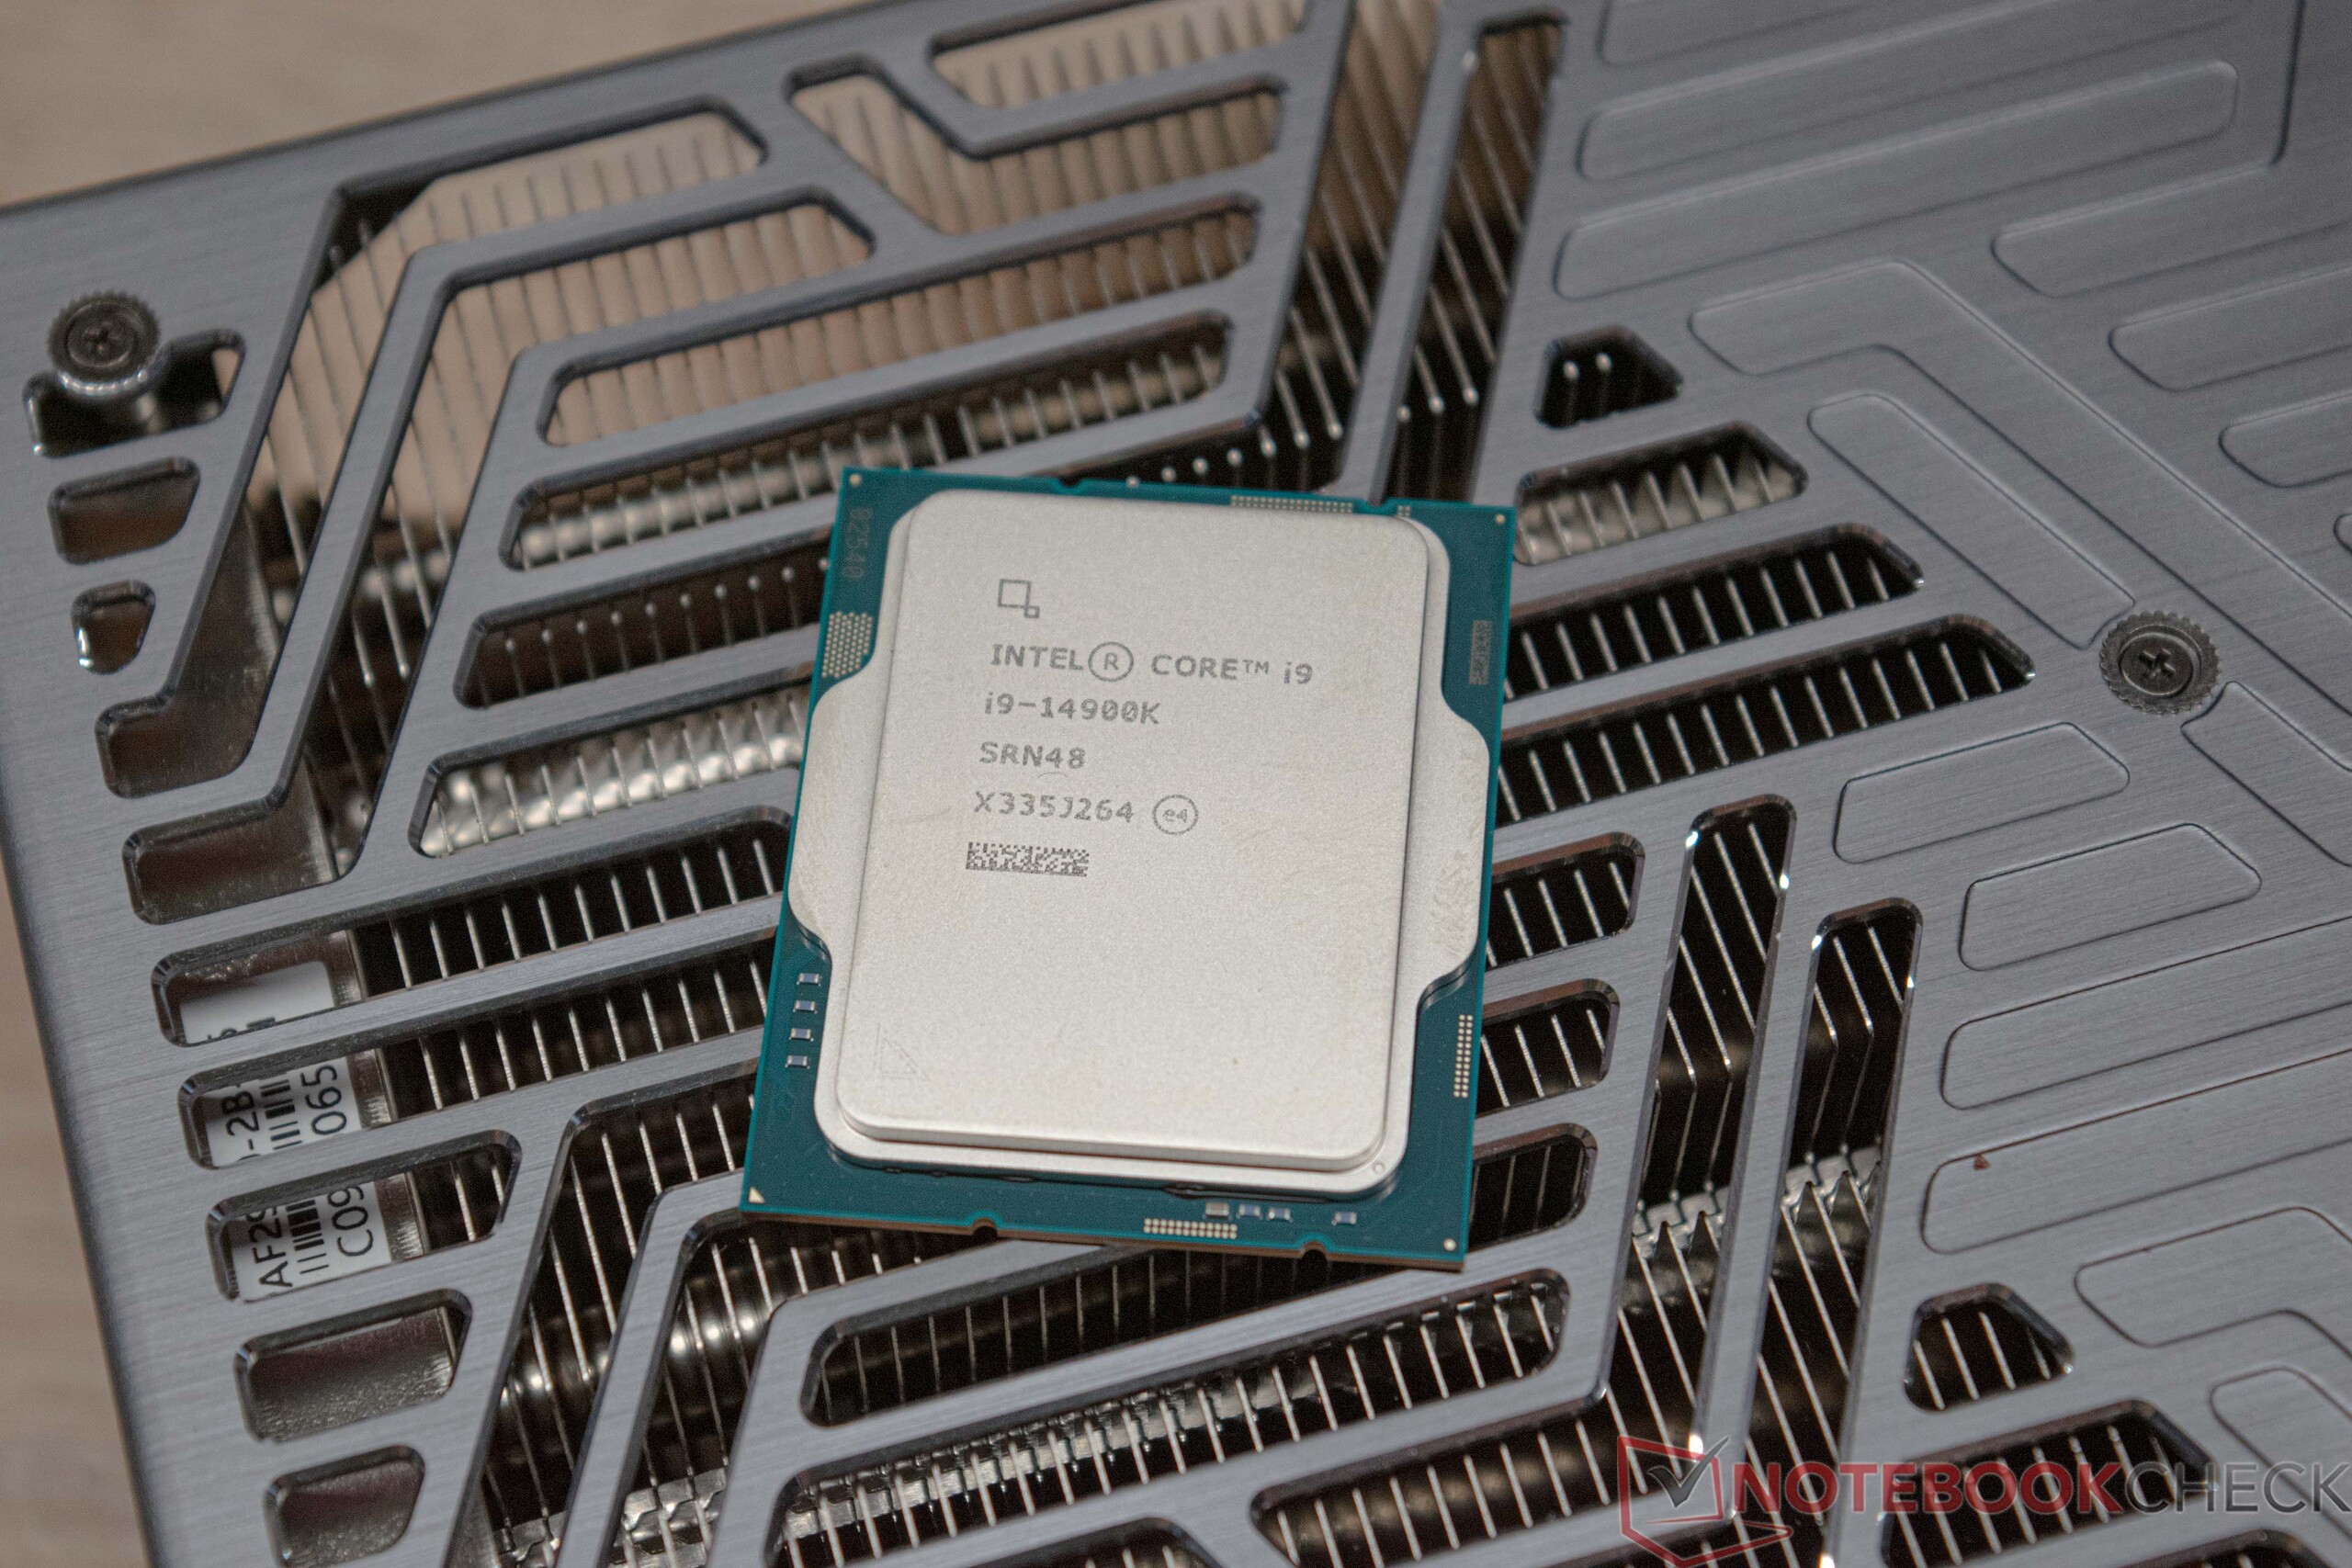 Intel Core i9-14900K vs Core i7-14700K: A tough competition